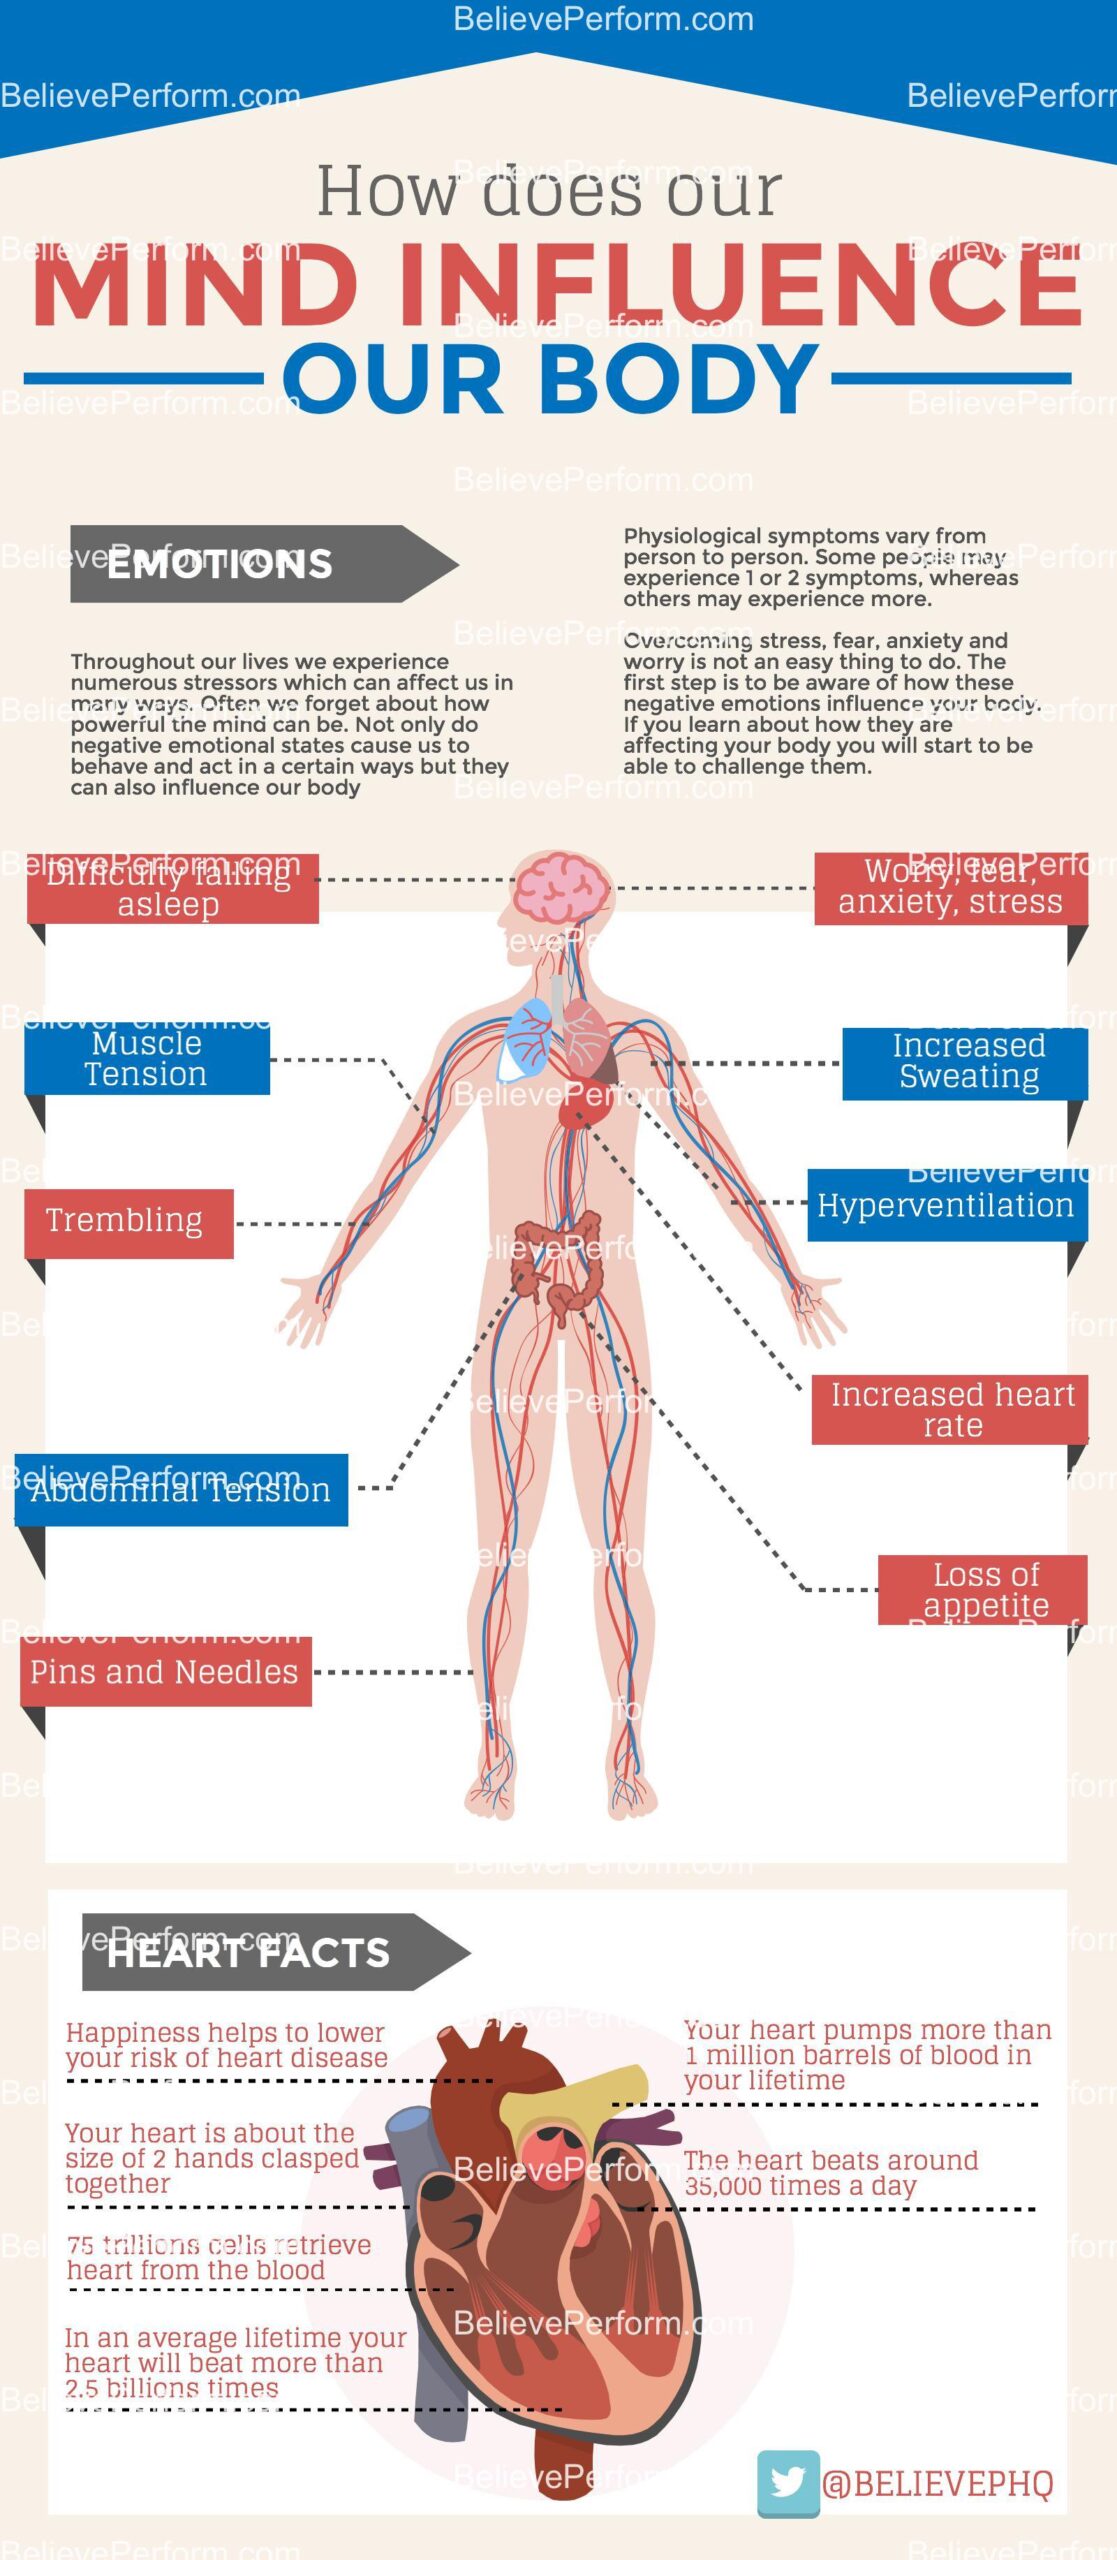 The body scan technique - Infographics - BelievePerform